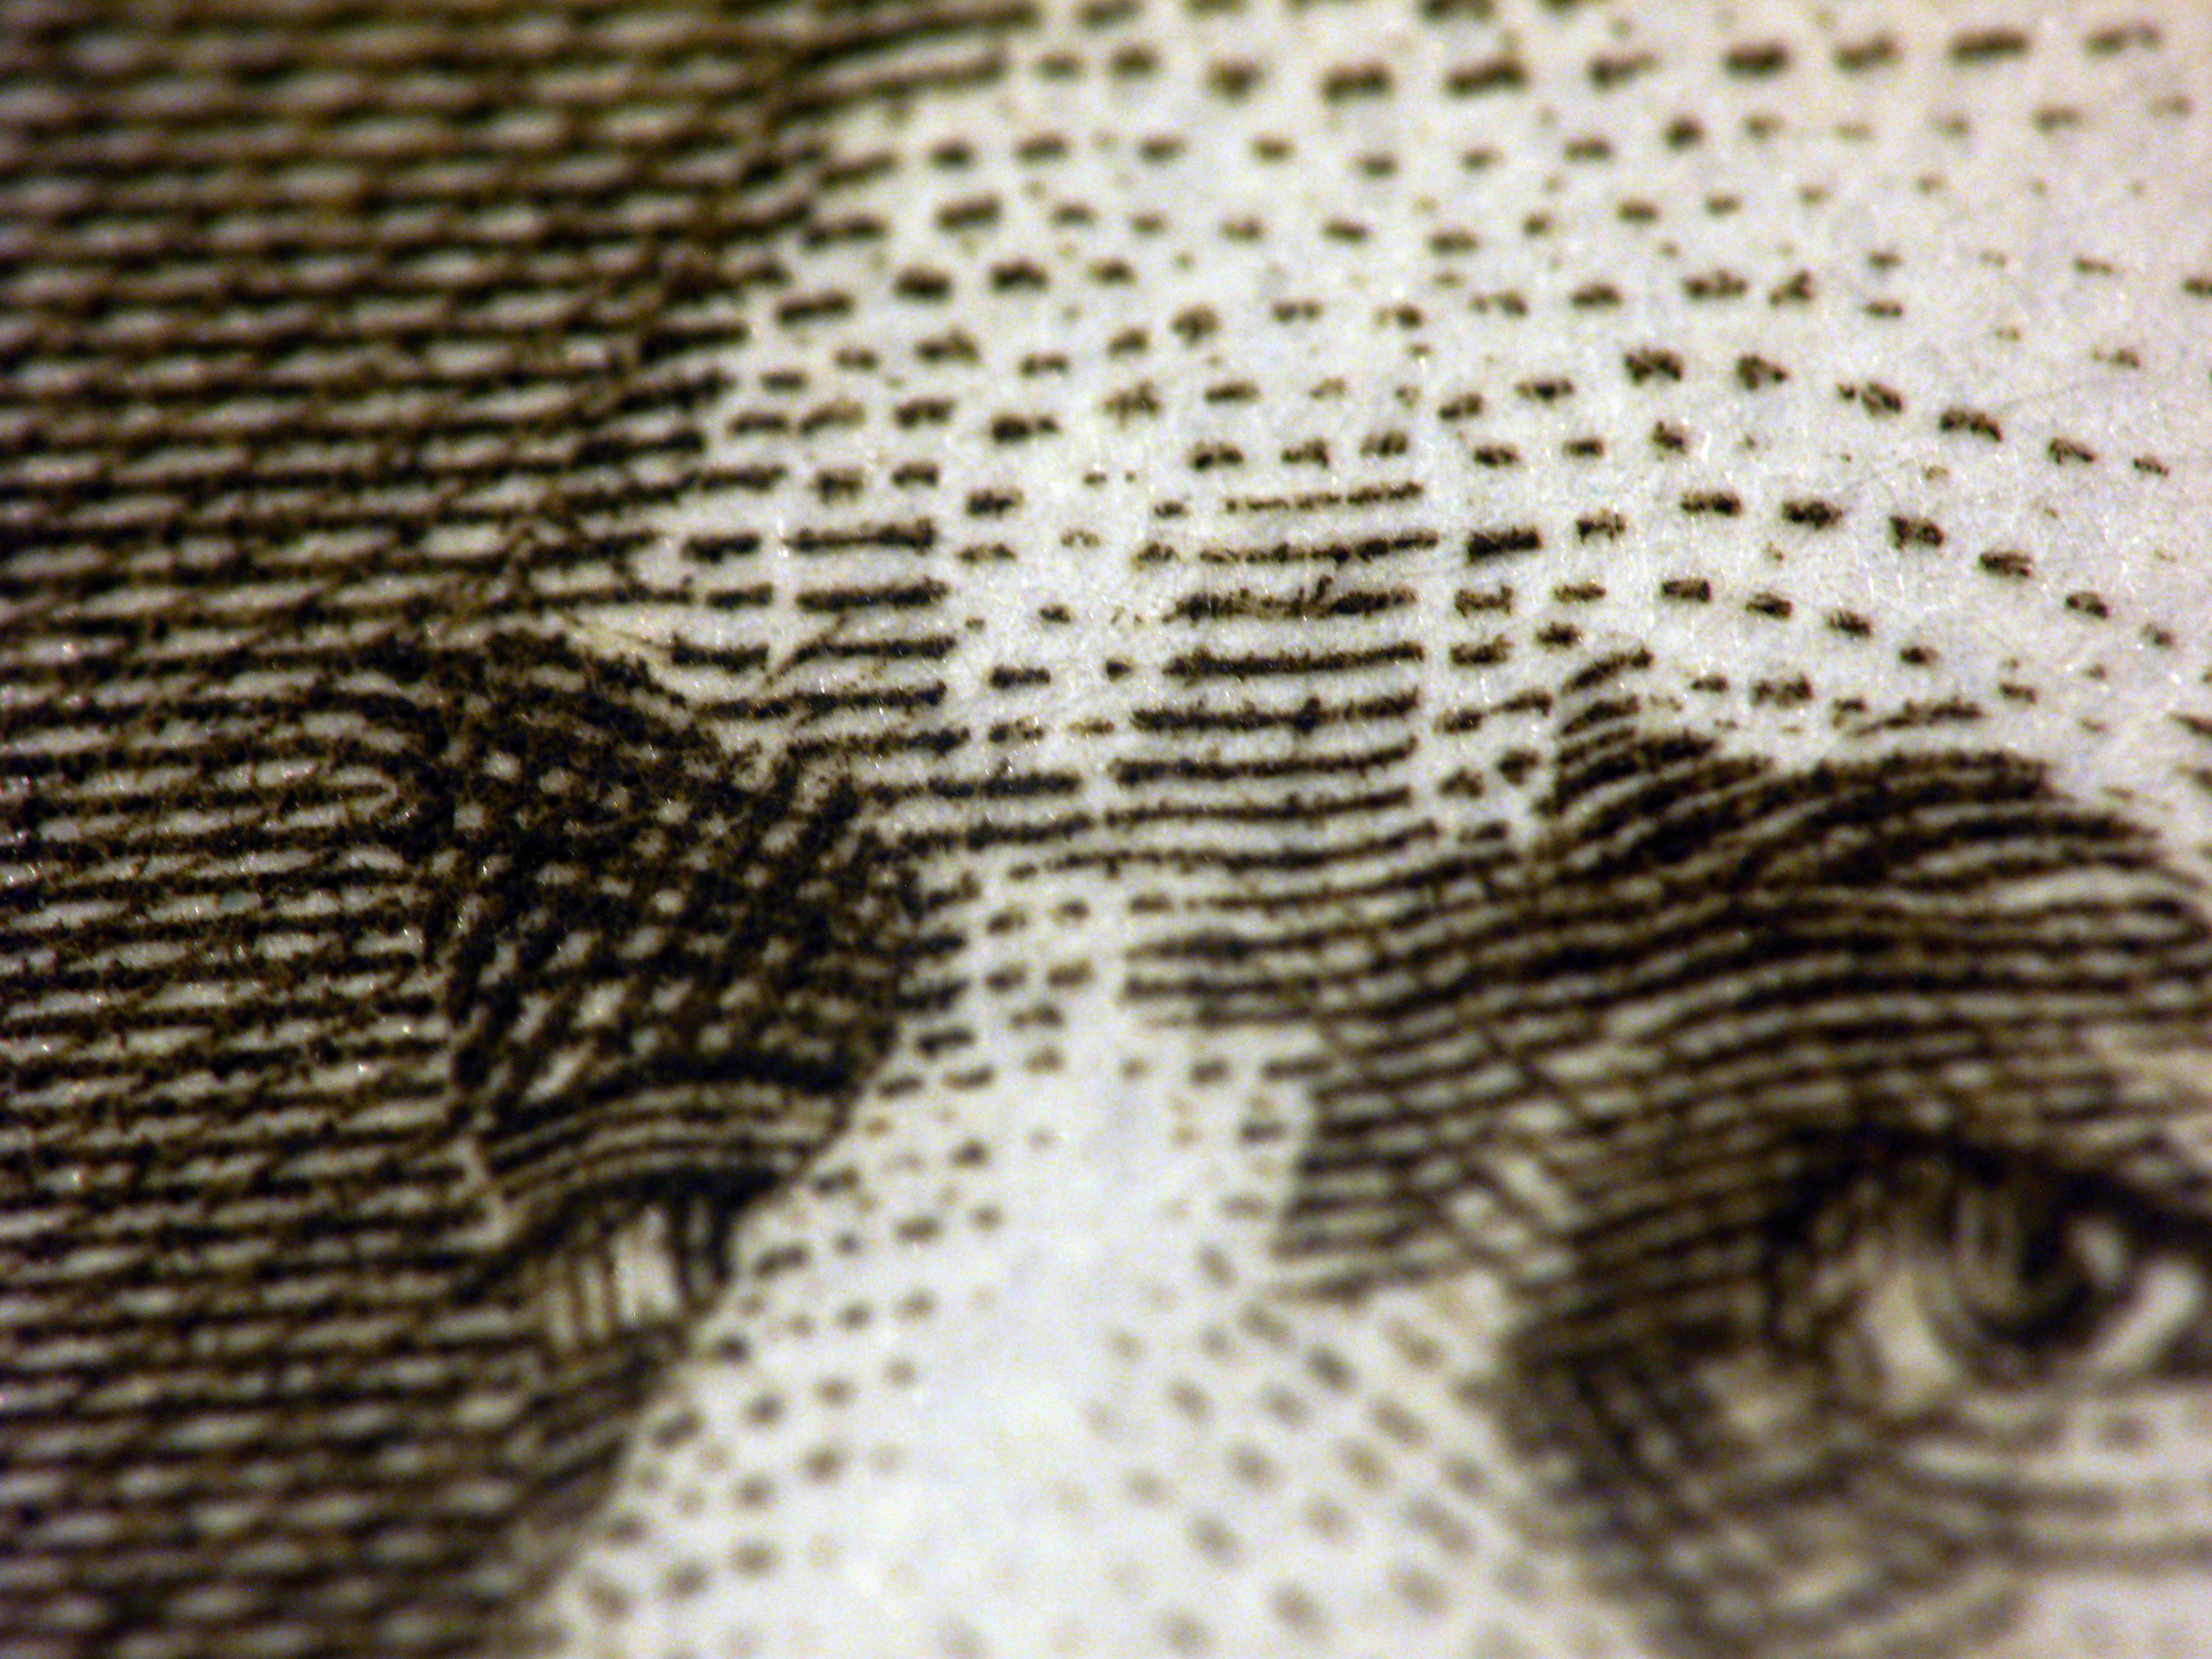 Paper money. Image: Kevin Dooley